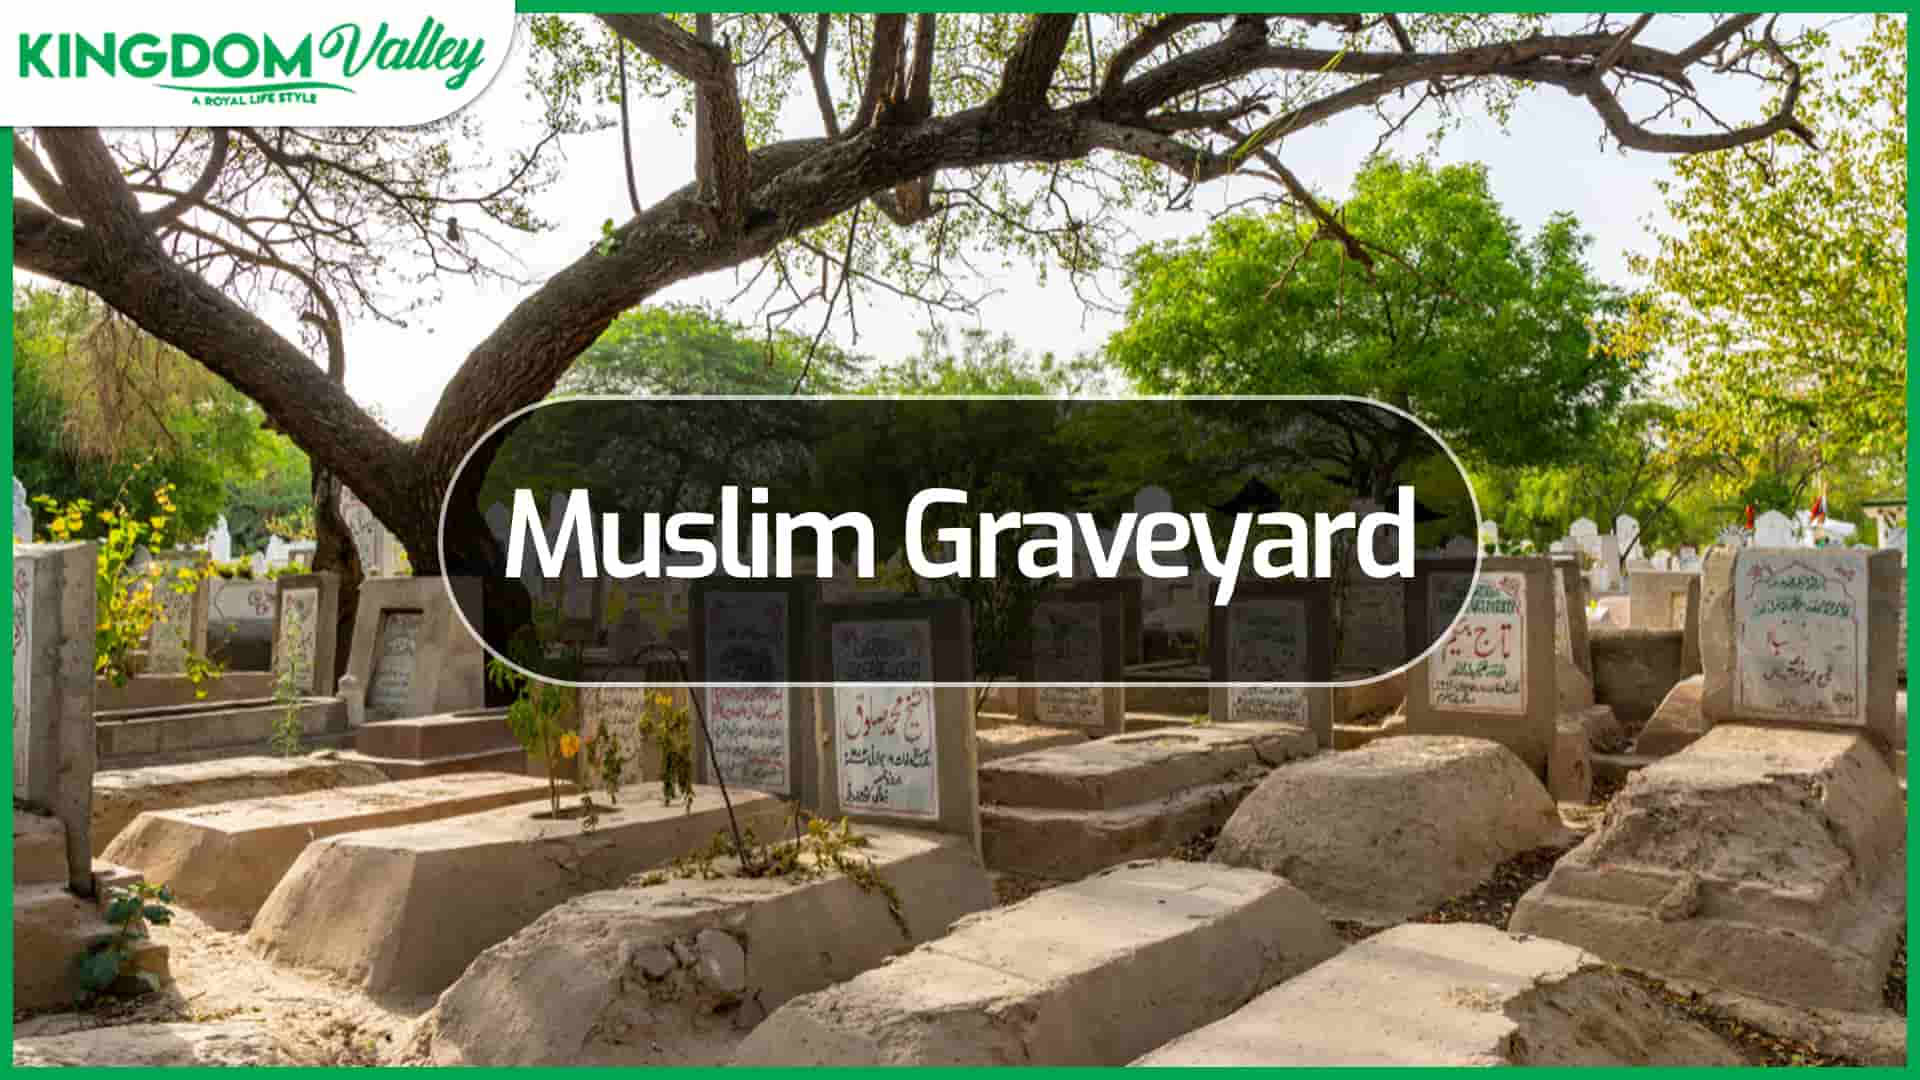 kindom valley muslim graveyard